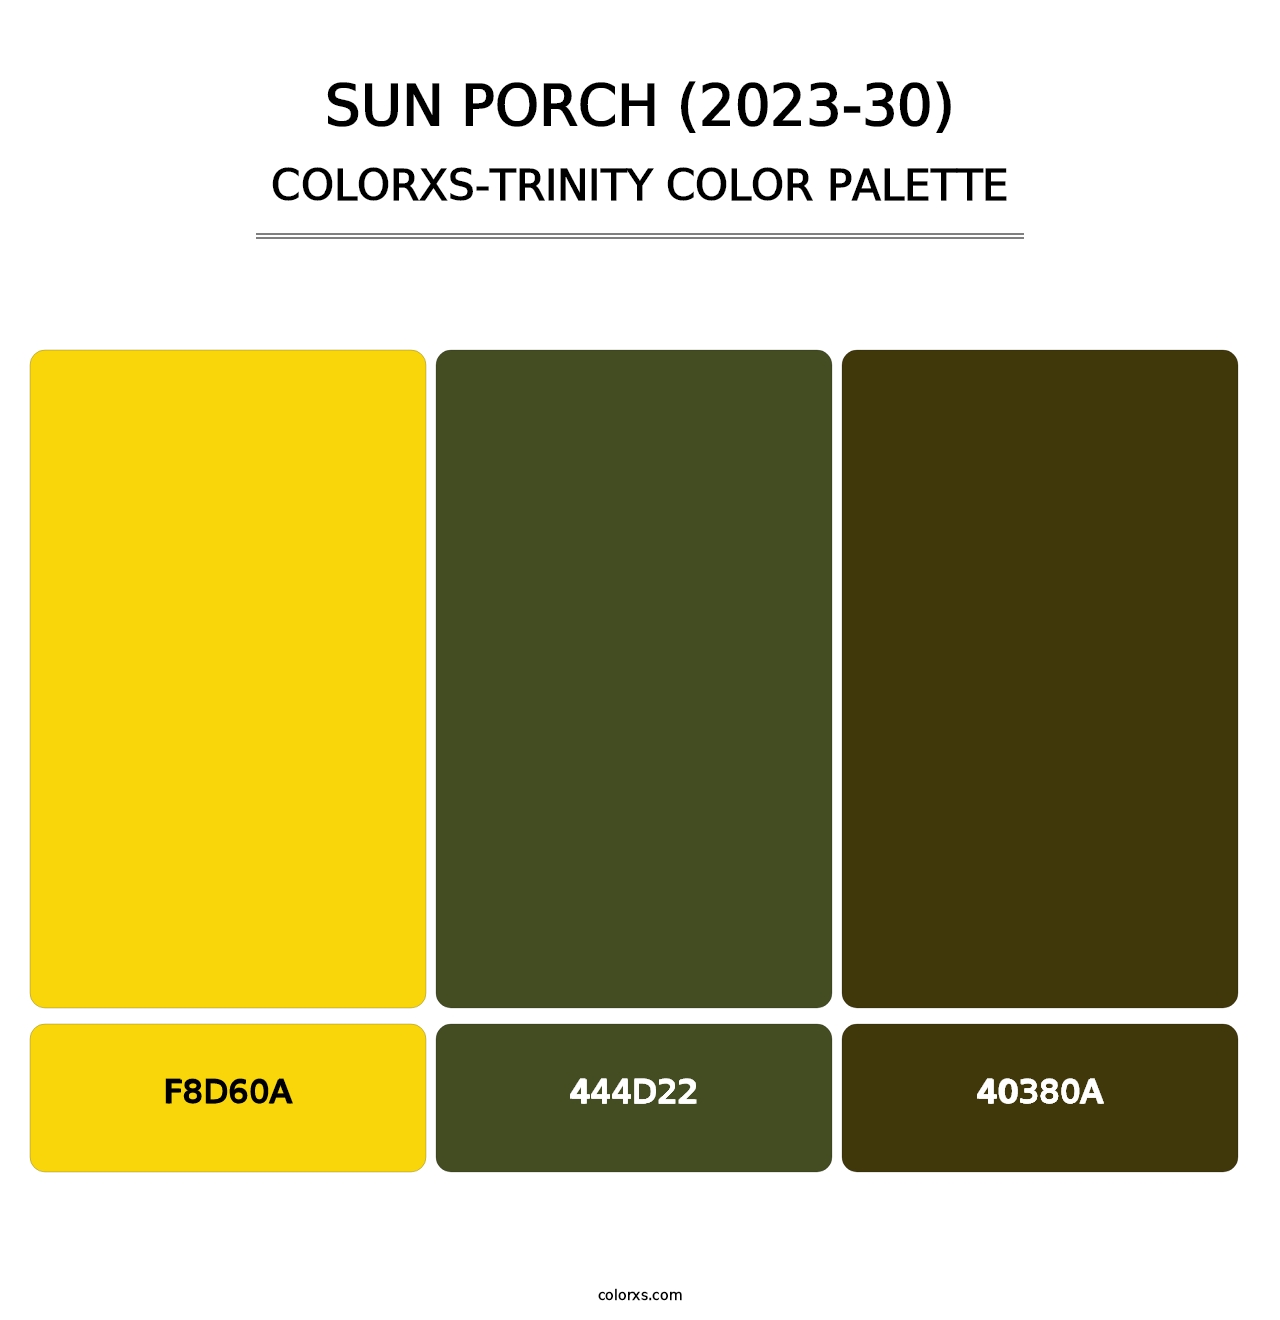 Sun Porch (2023-30) - Colorxs Trinity Palette